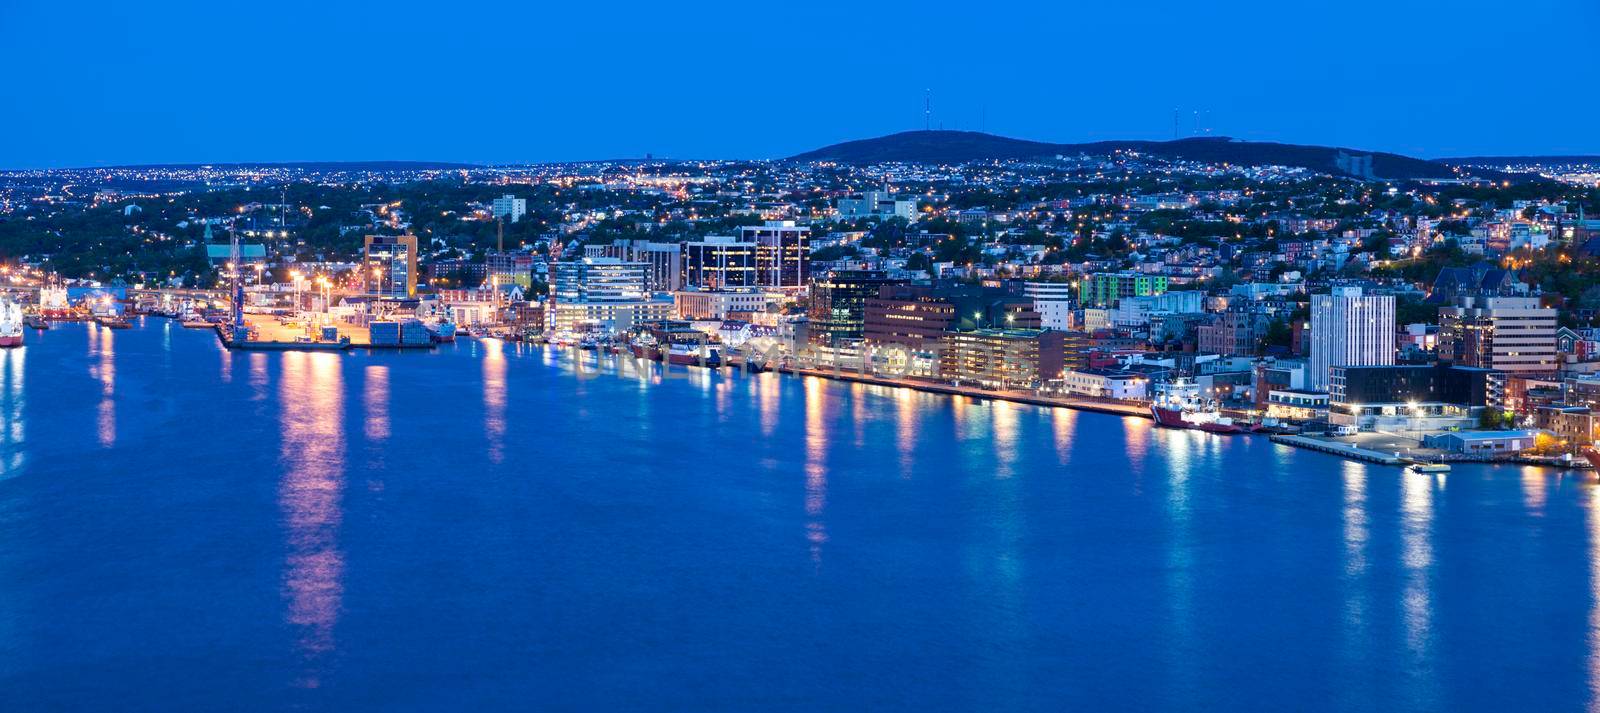 Panorama of St. John's at night. St. John's, Newfoundland and Labrador, Canada.